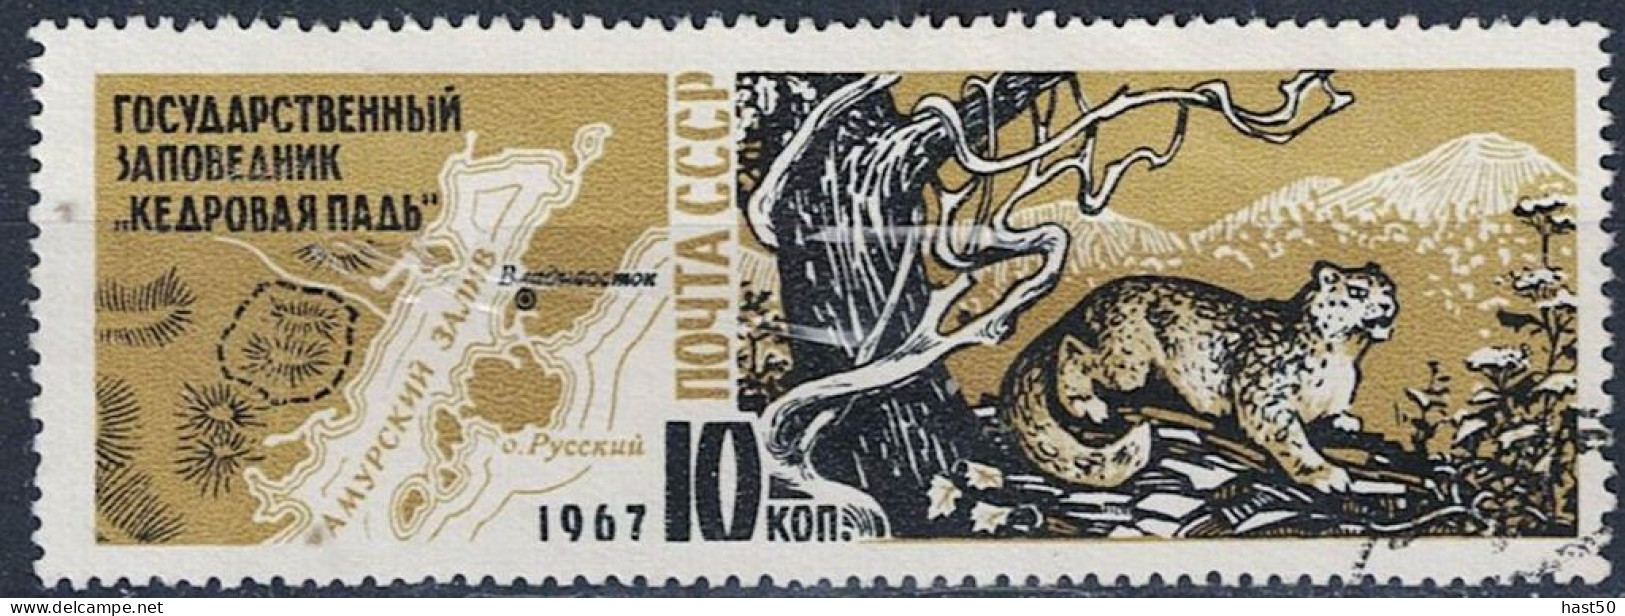 Sowjetunion UdSSR - Schneeleopard (Panthera Uncia) Vor Gebirgslandschaft (MiNr. 3400) 1967 - Gest Used Obl - Usati